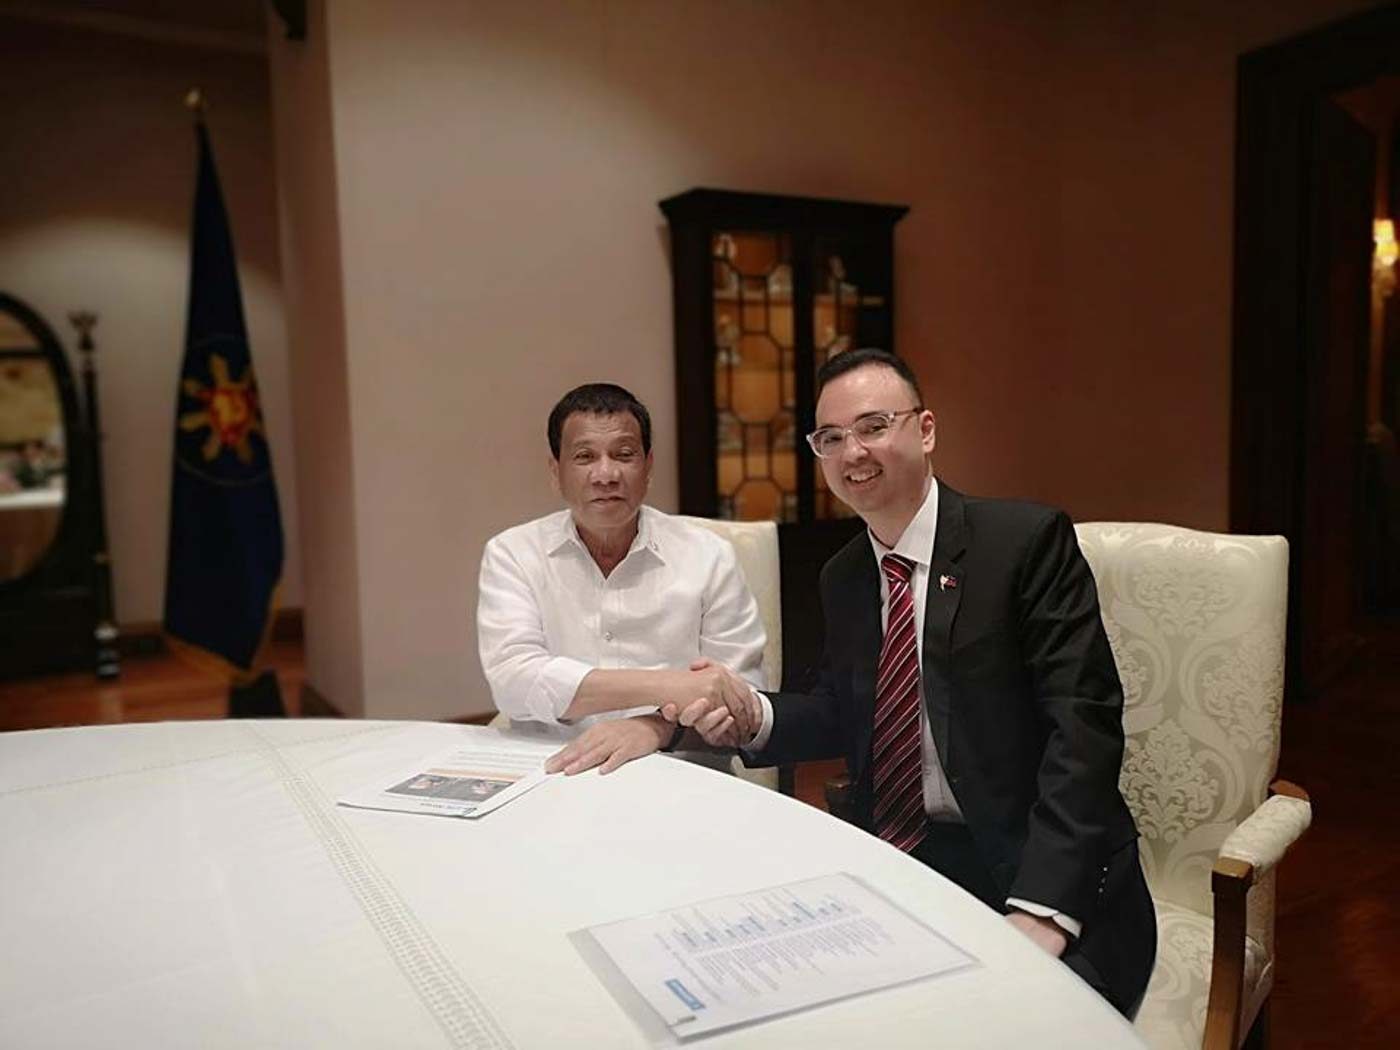 Resignation? Cayetano posts cryptic photo with Duterte